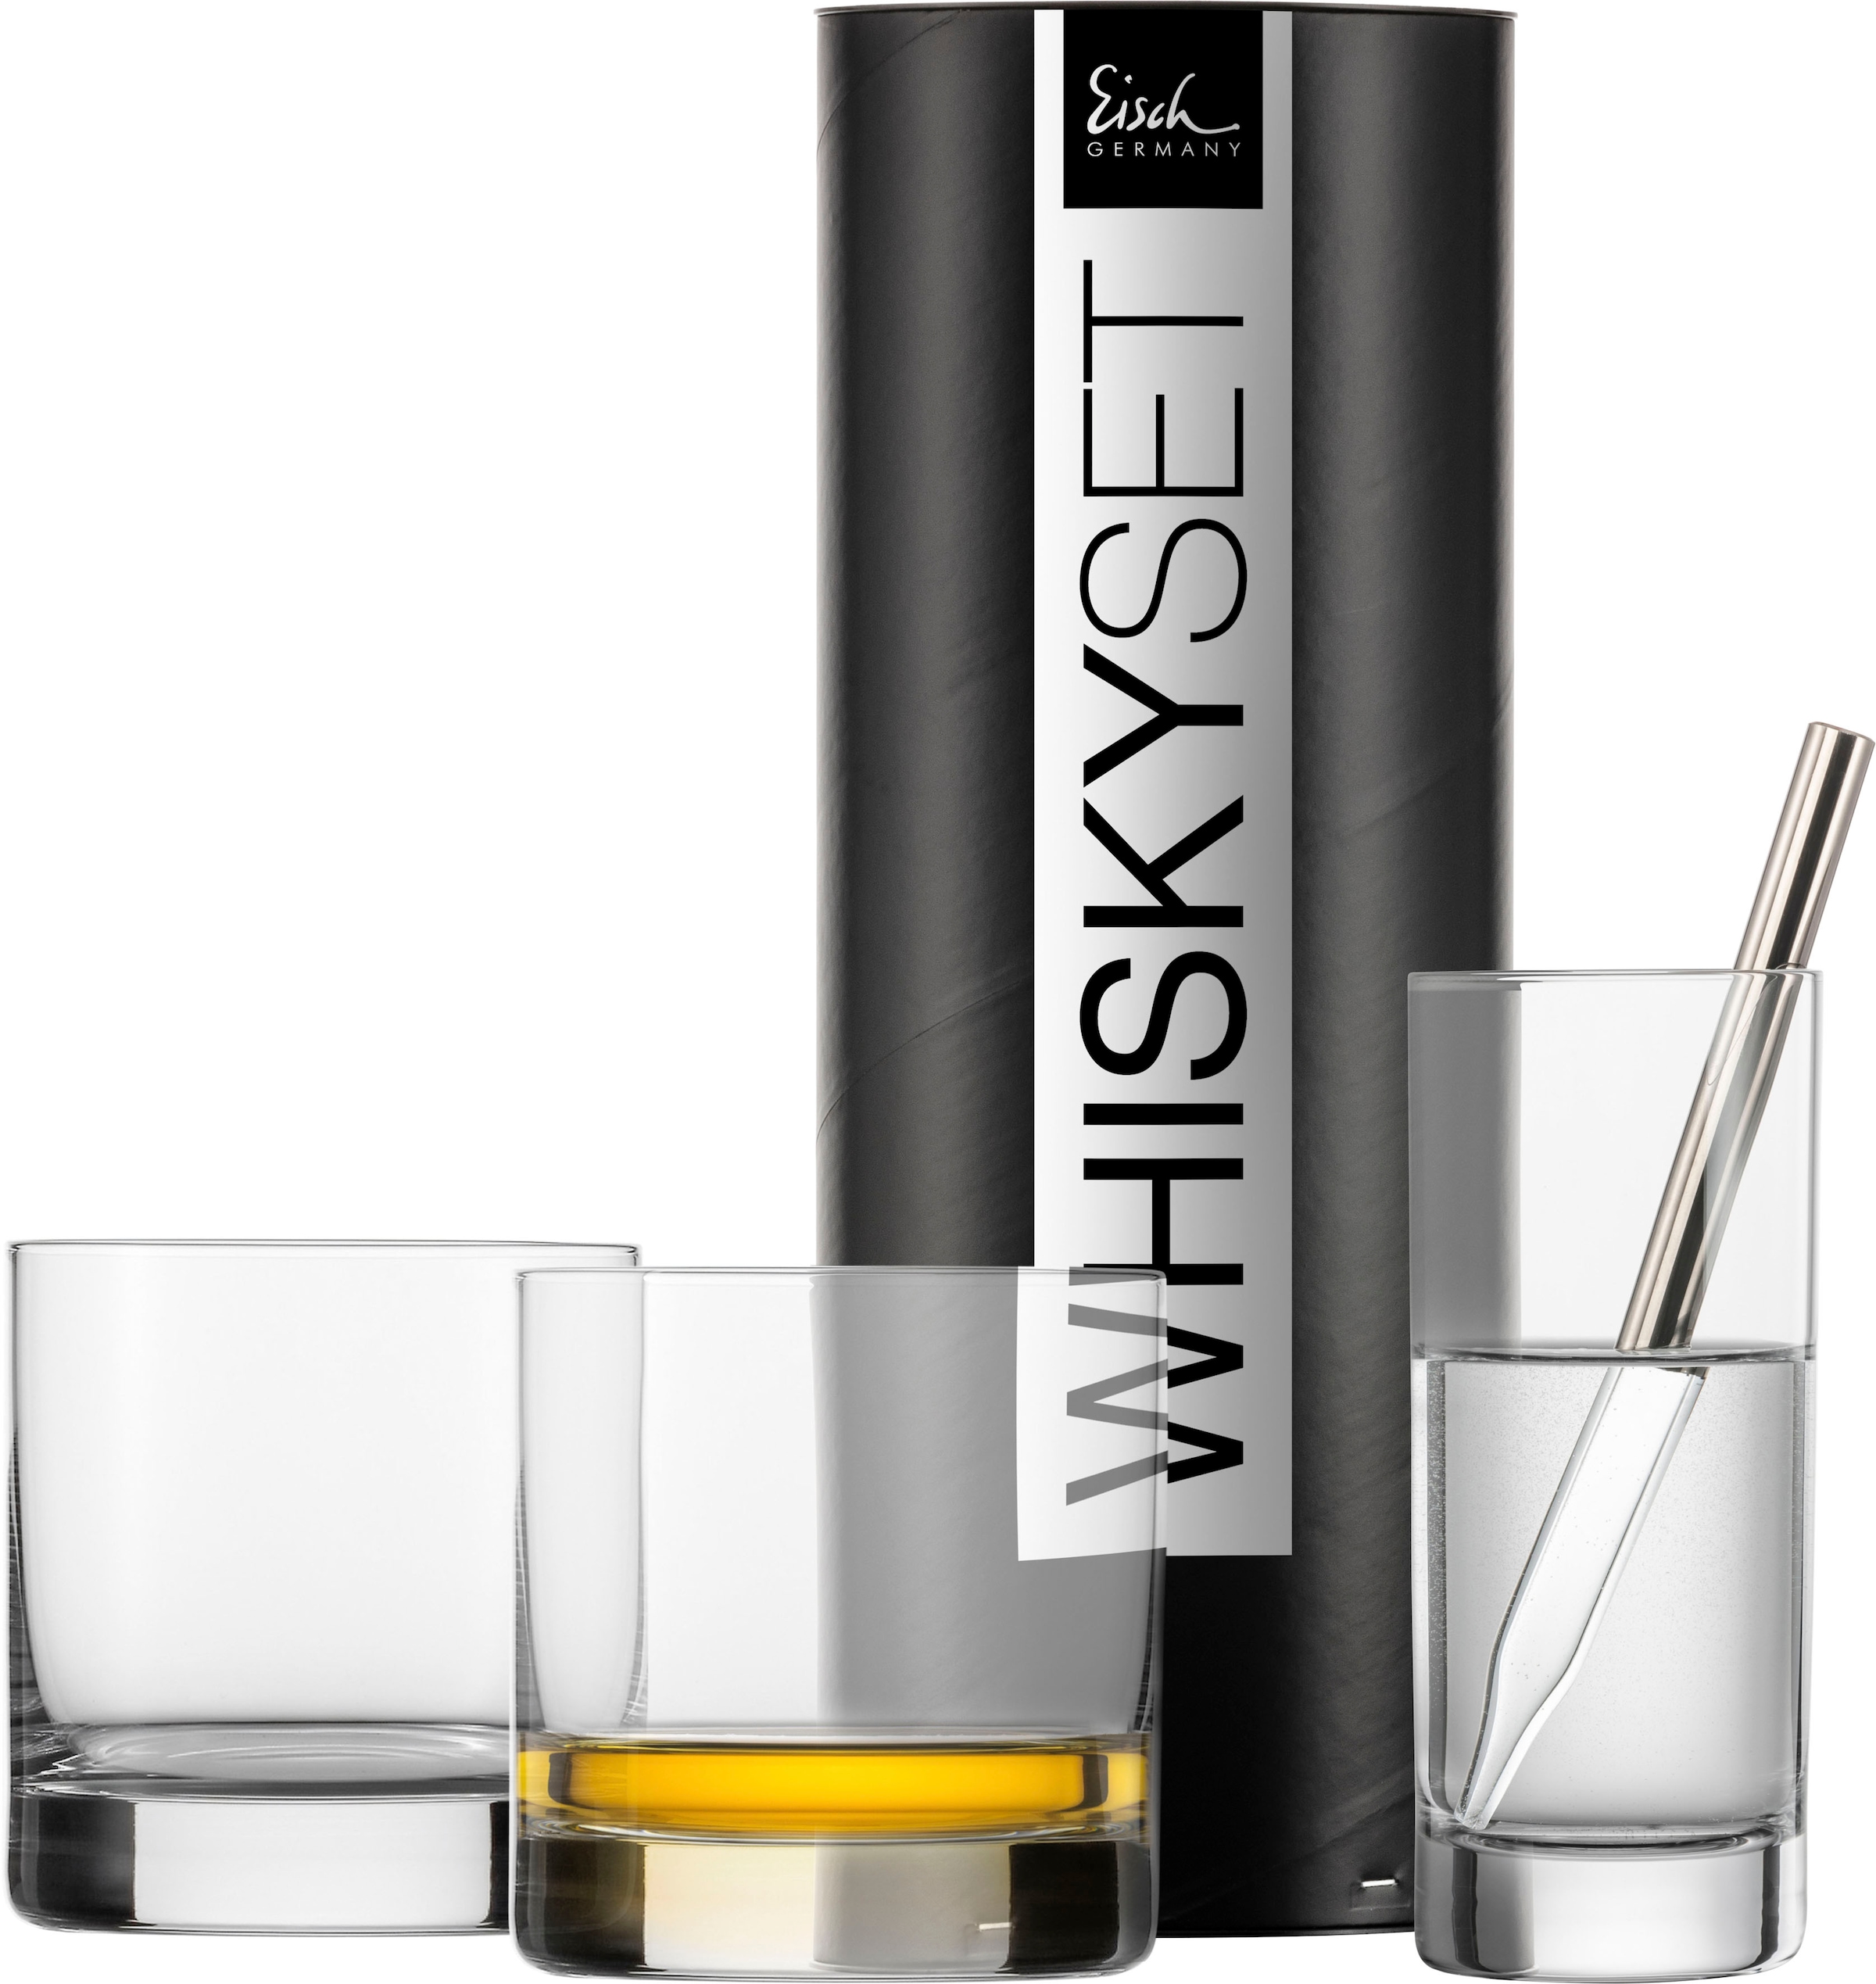 Eisch Whiskyglas »GENTLEMAN«, (Set, 4 tlg., 1 Whisky-Pipette, 2 Whisky-Tumbler, 1 Wasserglas in Geschenkröhre), Made in Germany, 4-teilig